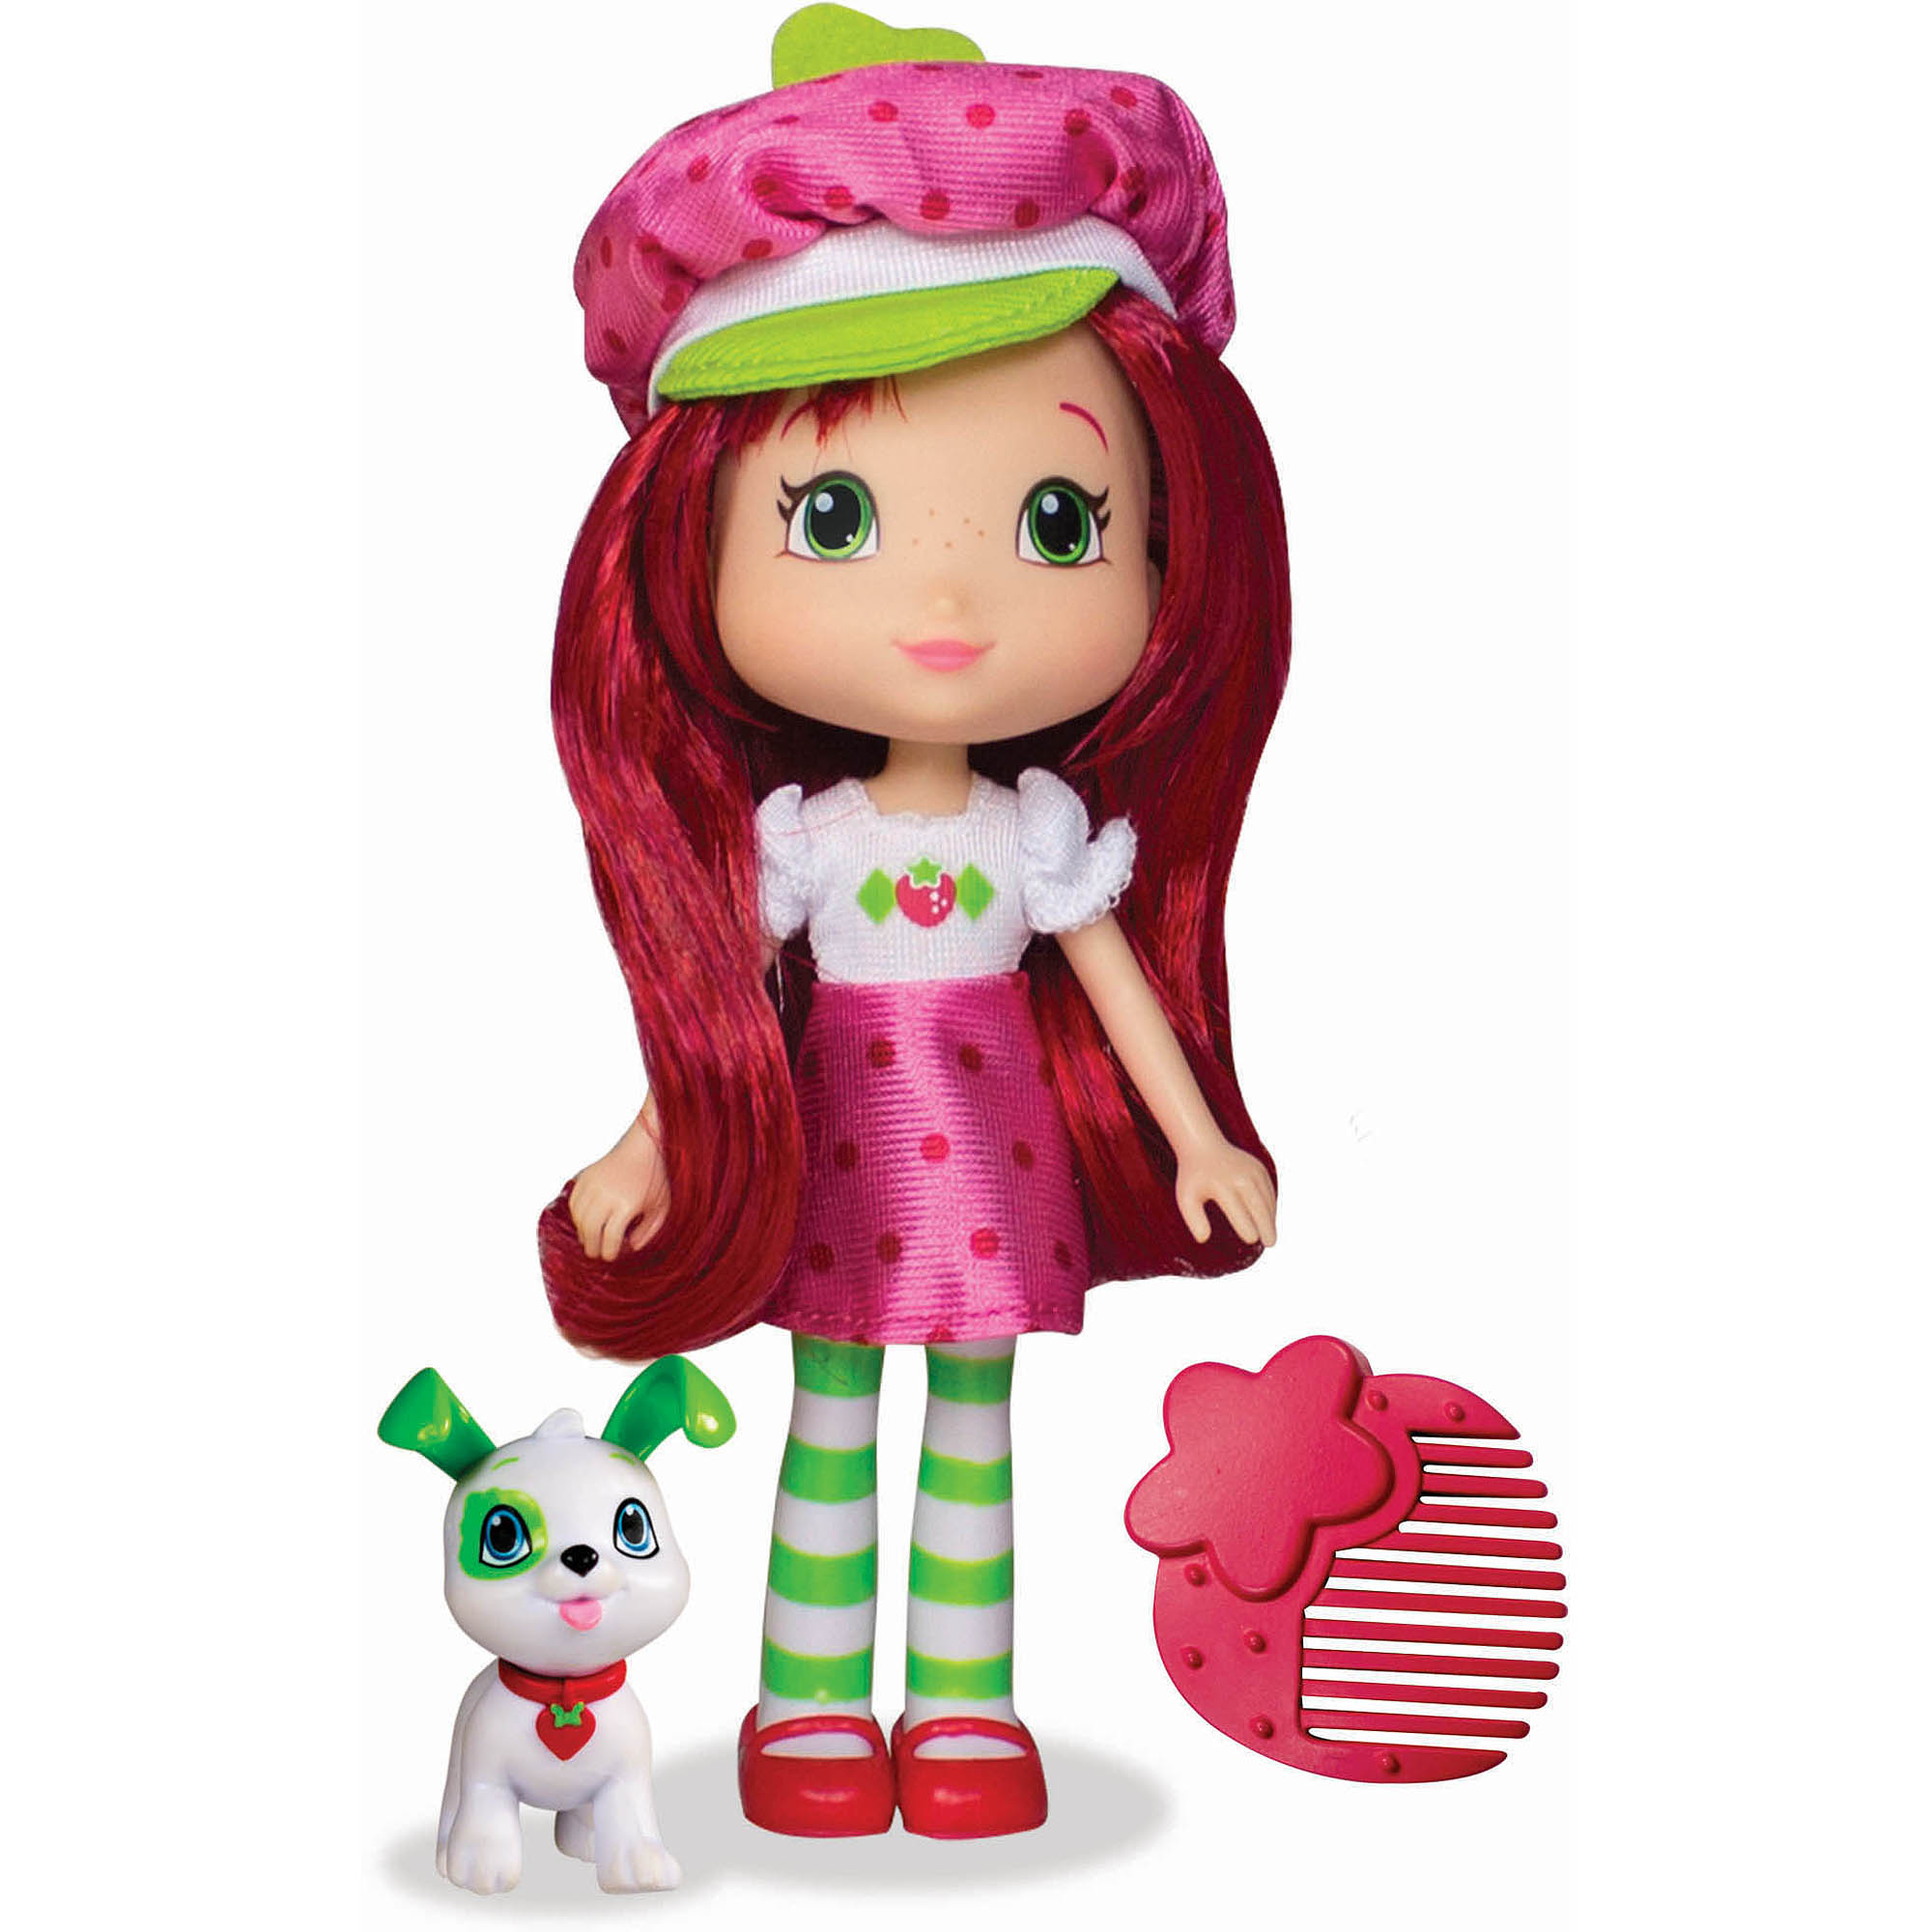 Strawberry Shortcake Doll with Pupcake - image 1 of 2